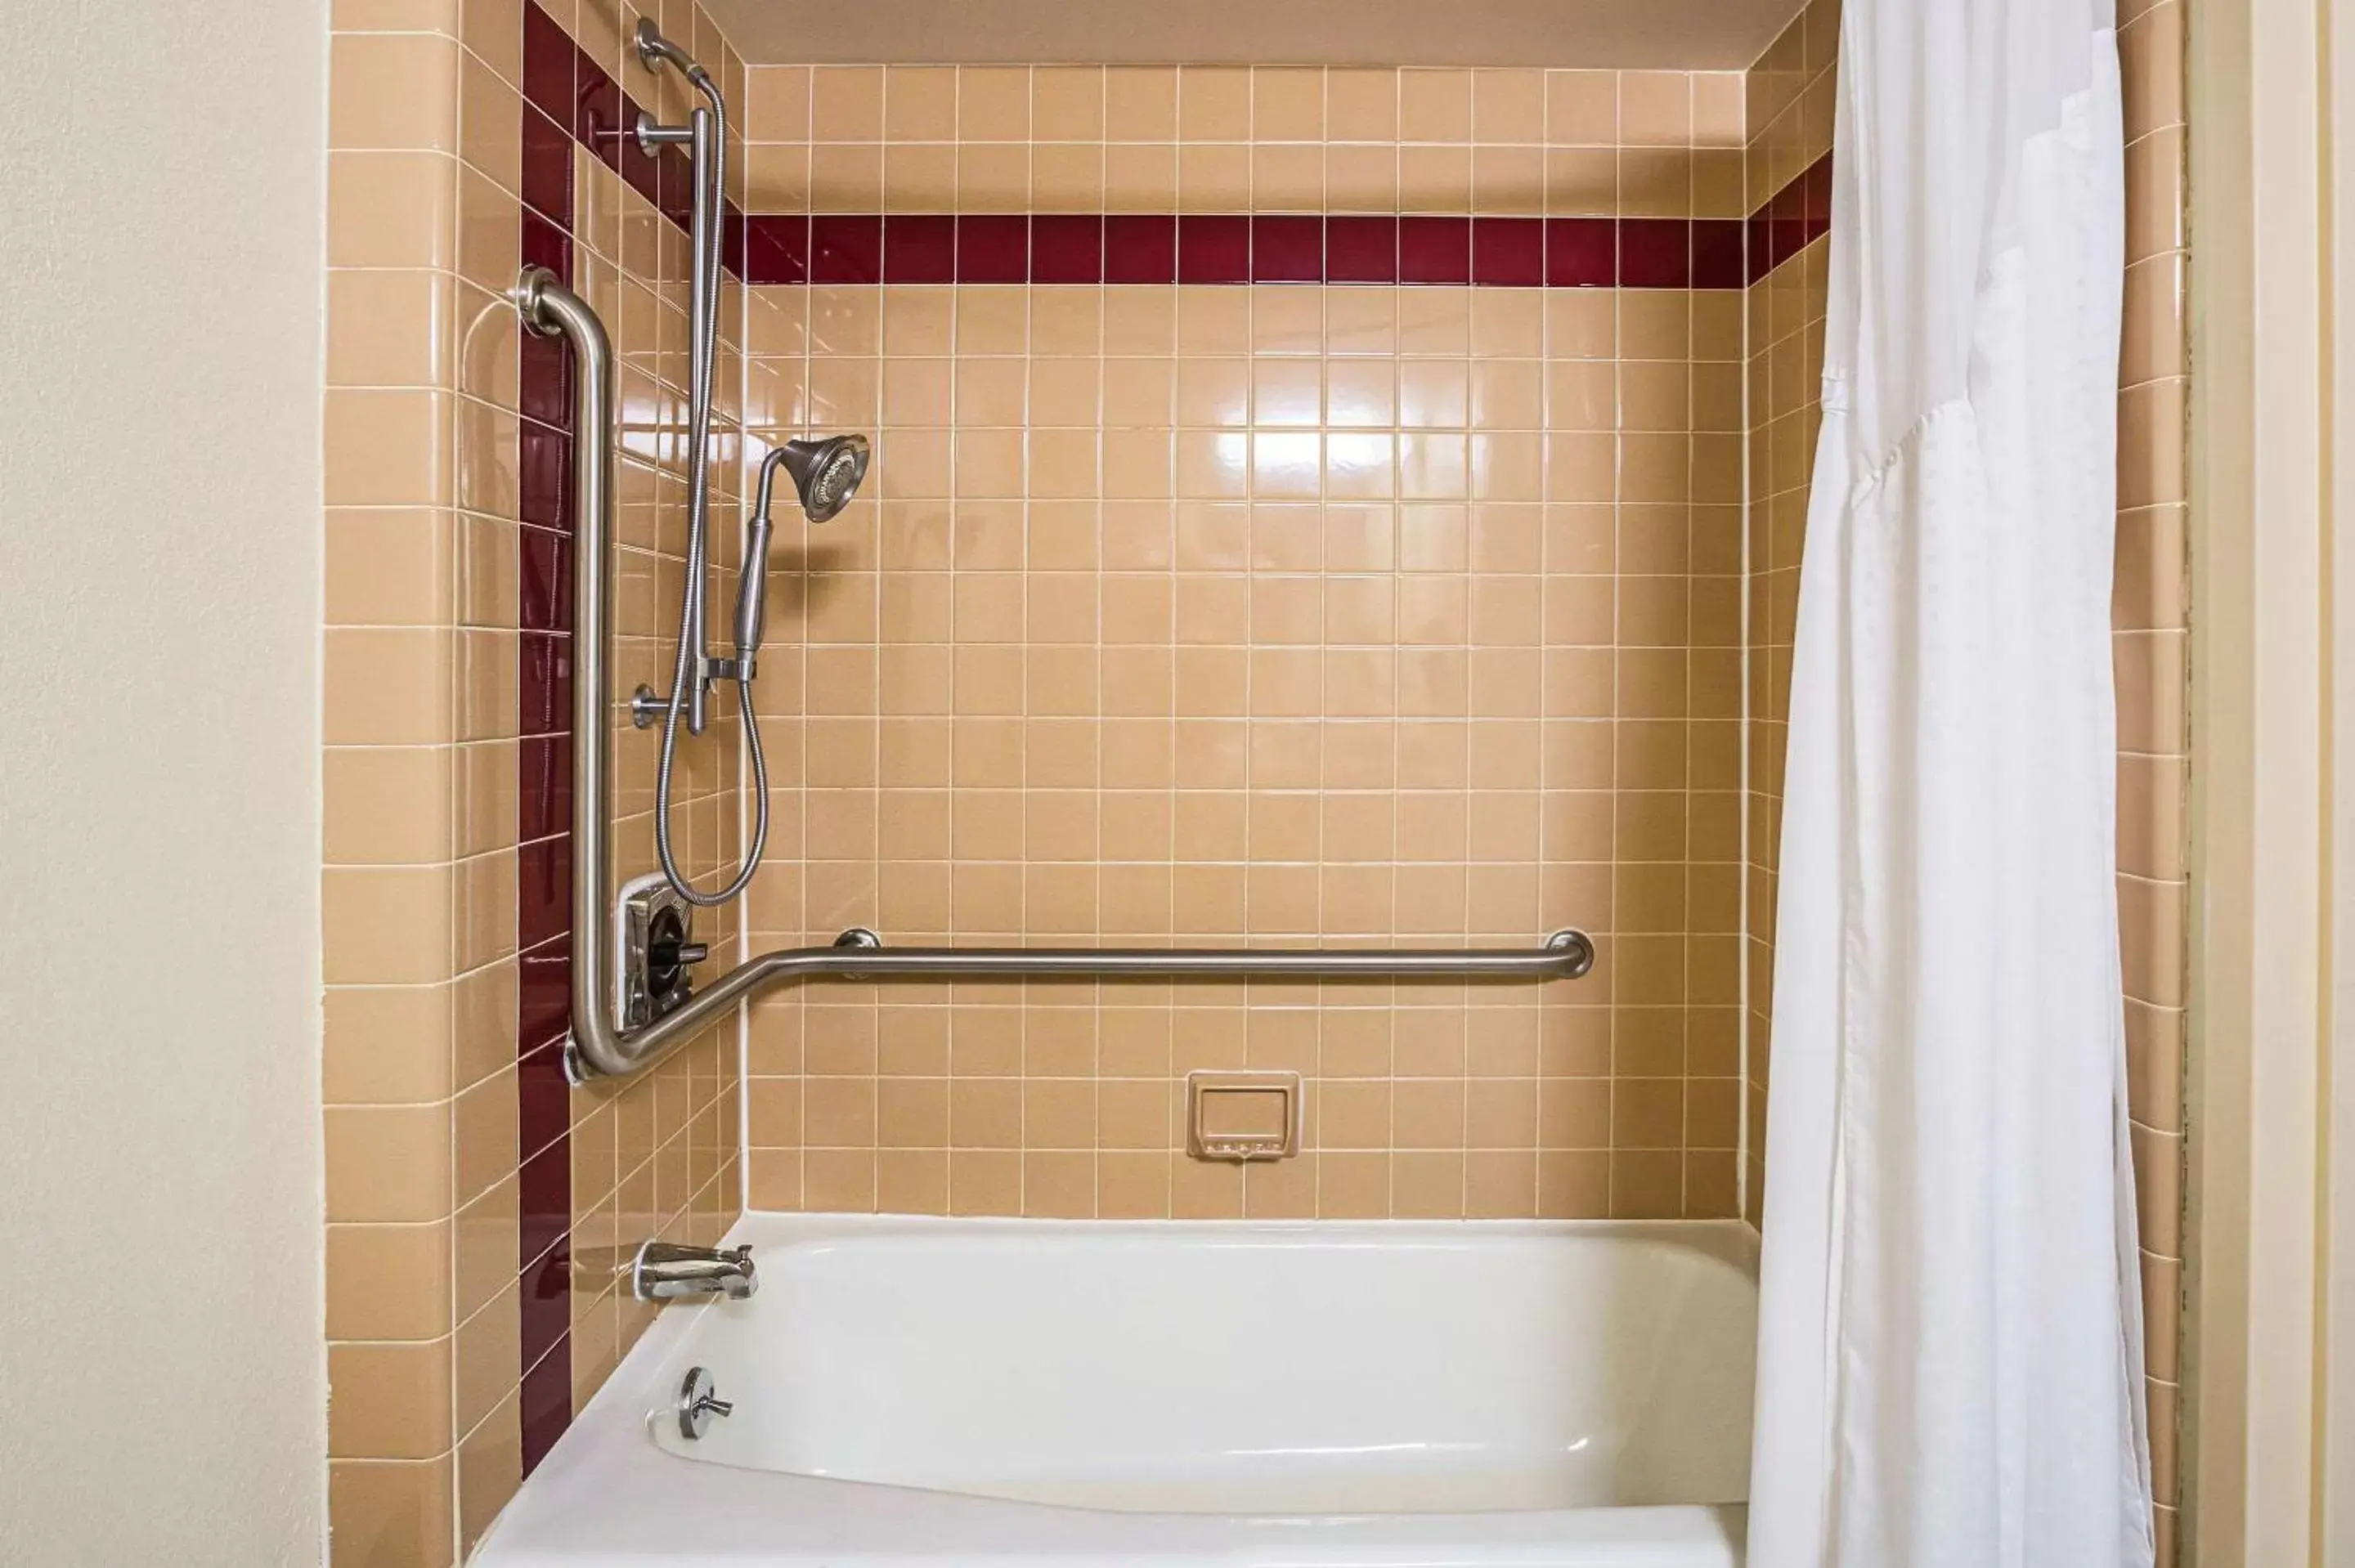 Photo of the whole room, Bathroom in Quality Inn & Suites Altoona Pennsylvania